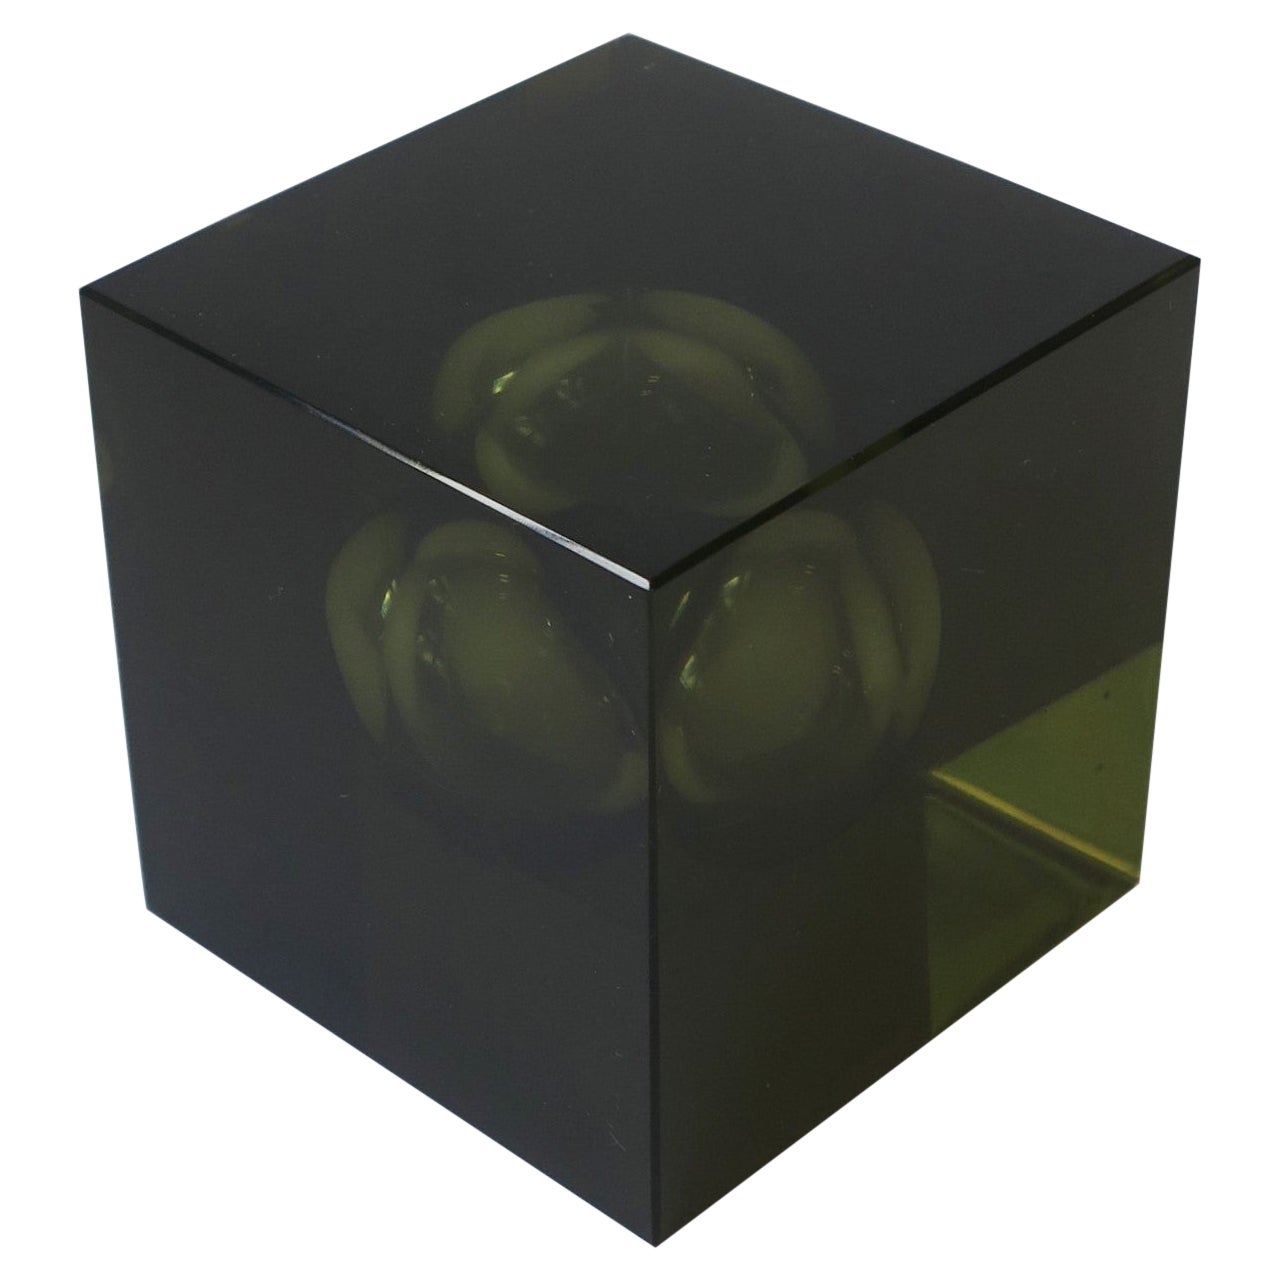 Japanese Smoked Black Crystal Cube Decorative Object